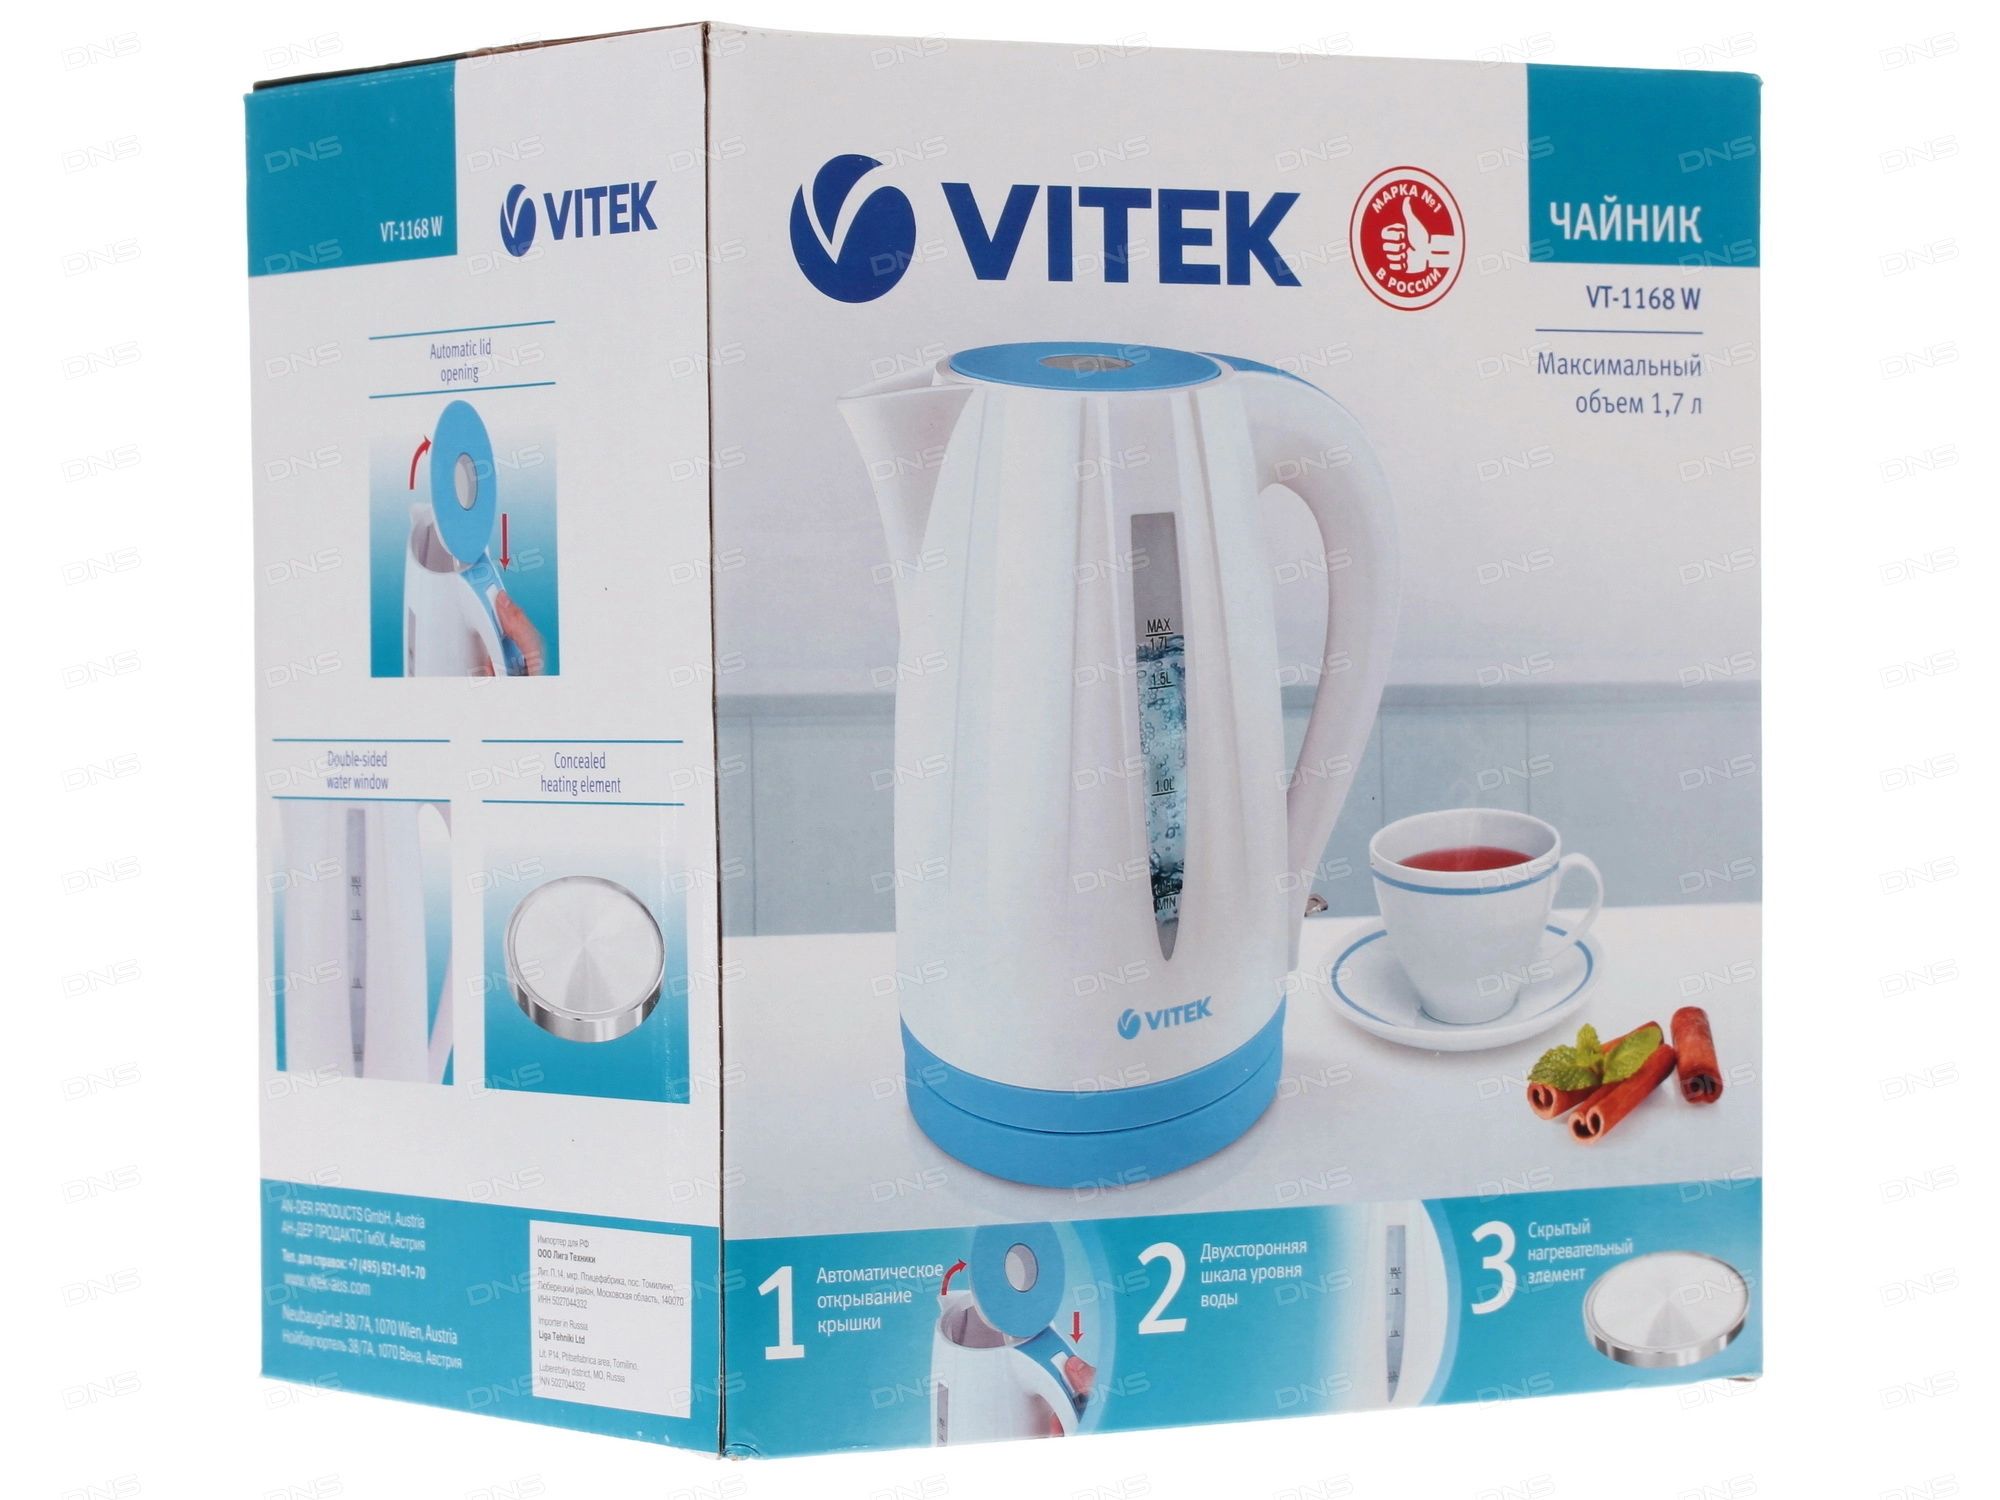 Fierbator de apa electric Vitek VT-1168 W, 1.7 l, 2200 W, Alte culori